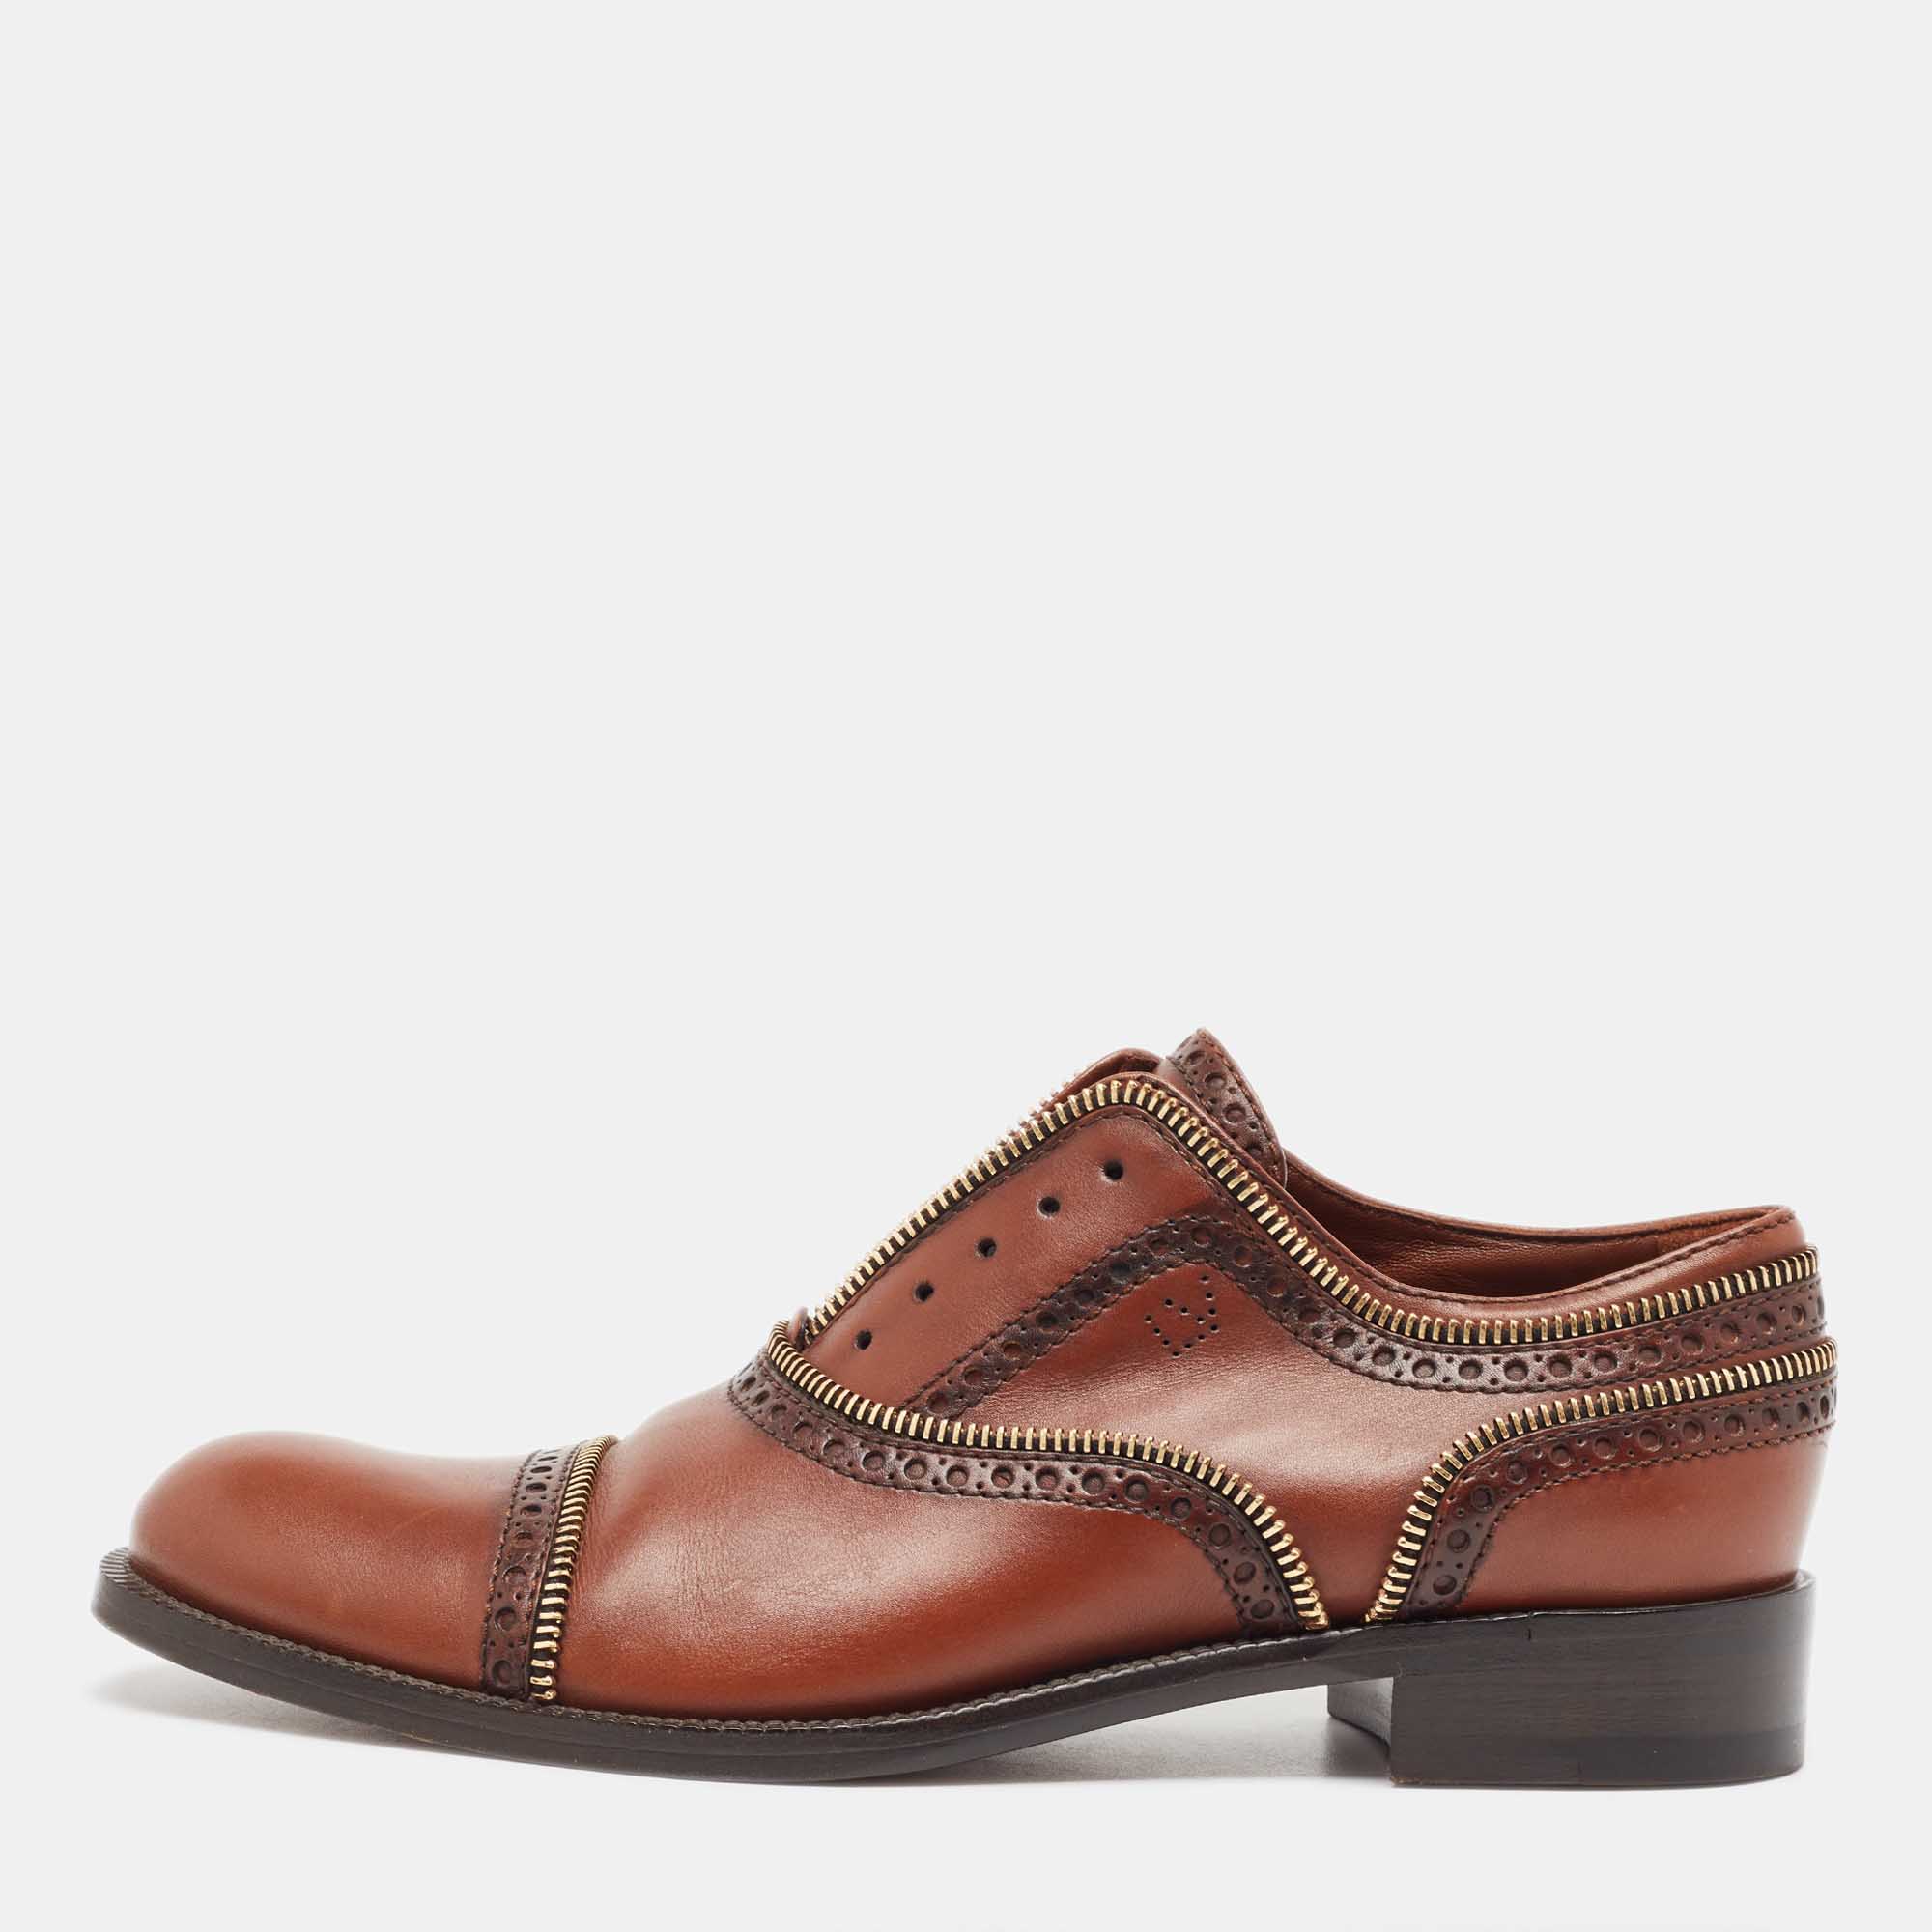 Louis vuitton brown brogue leather zip trim slip on oxfords size 38.5